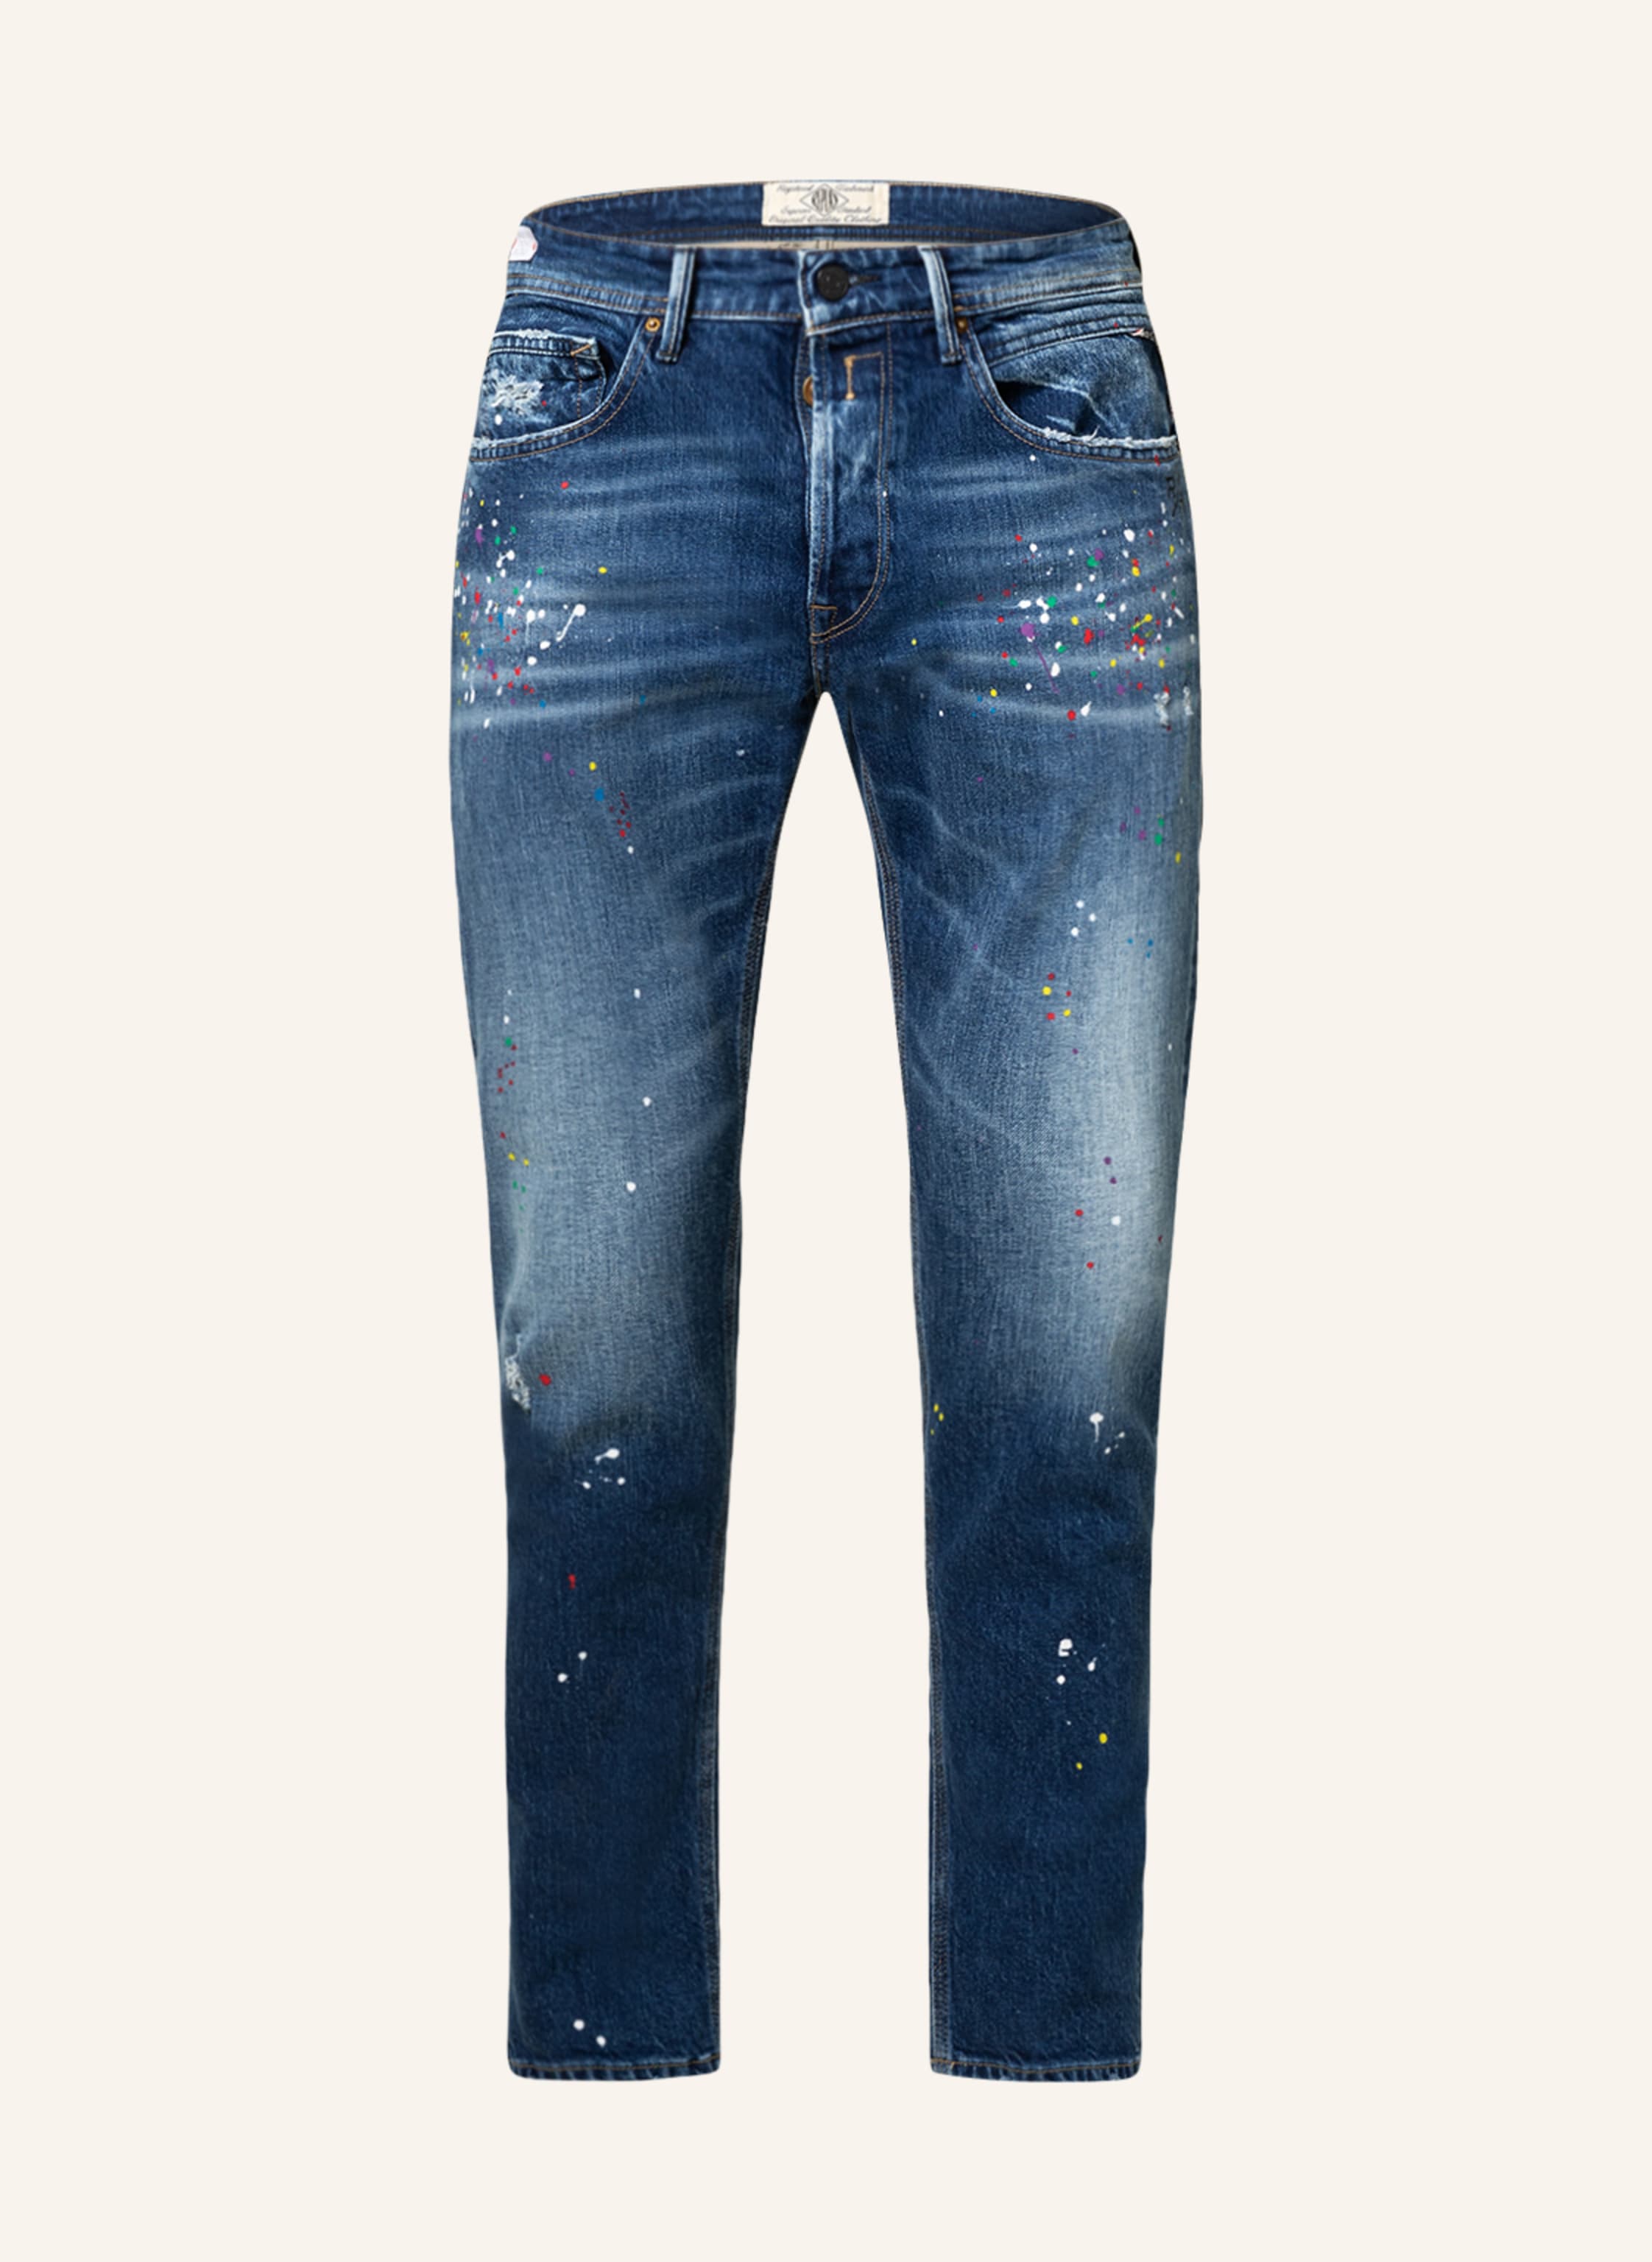 Scheiden boete Metropolitan REPLAY Destroyed Jeans Regular Slim Fit in 009 medium blue | Breuninger